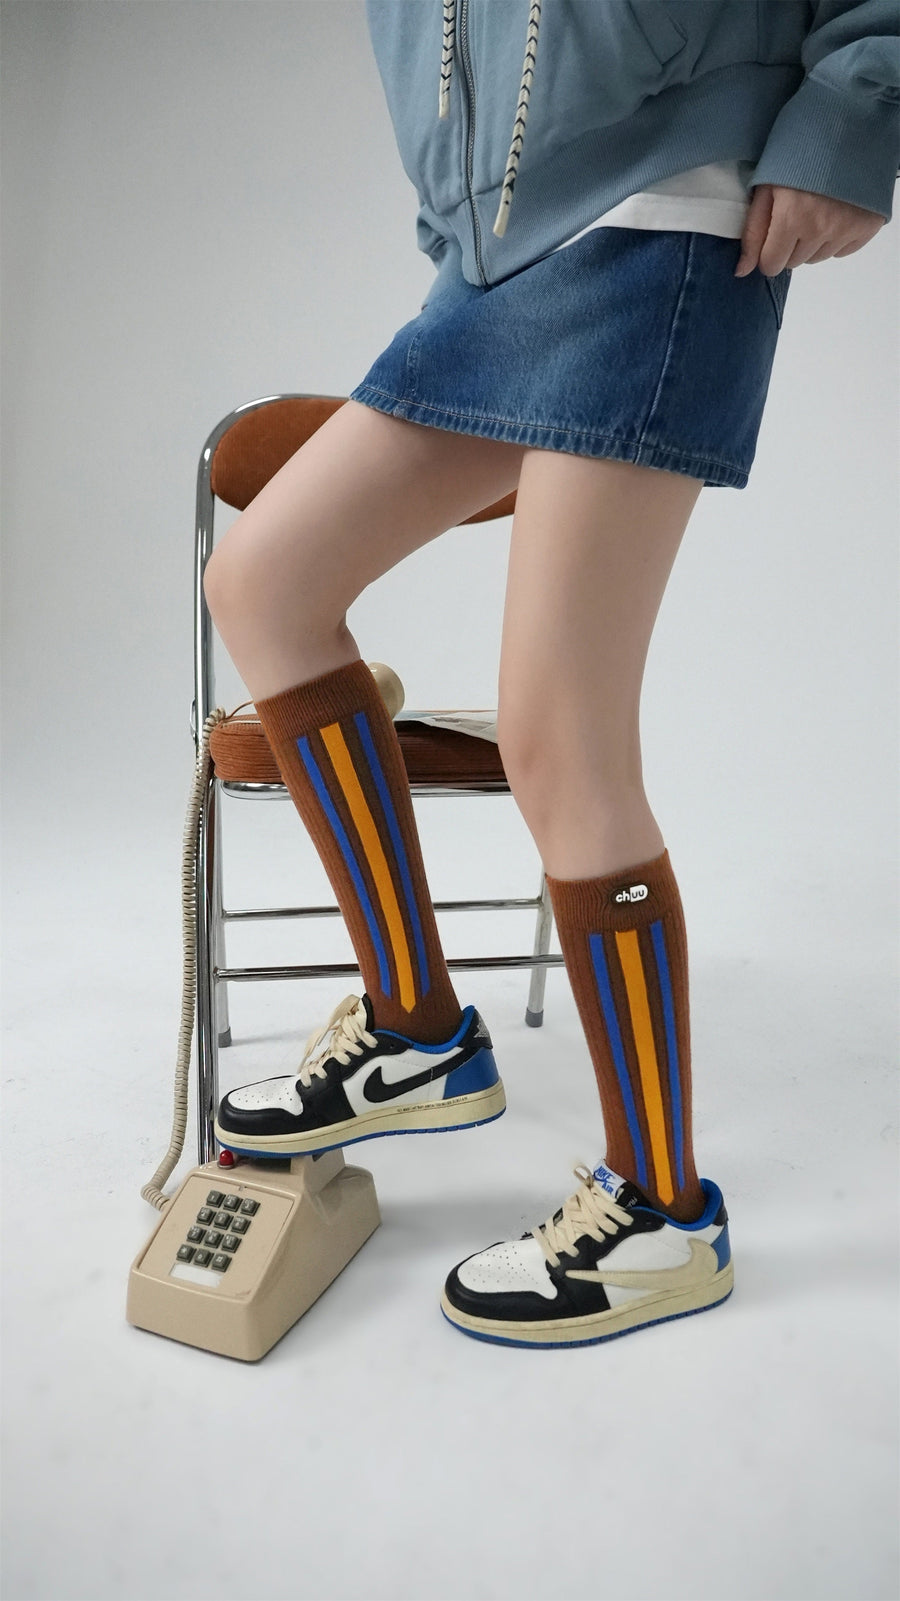 CHUU Three Bands Stripe Mid-Calf Socks